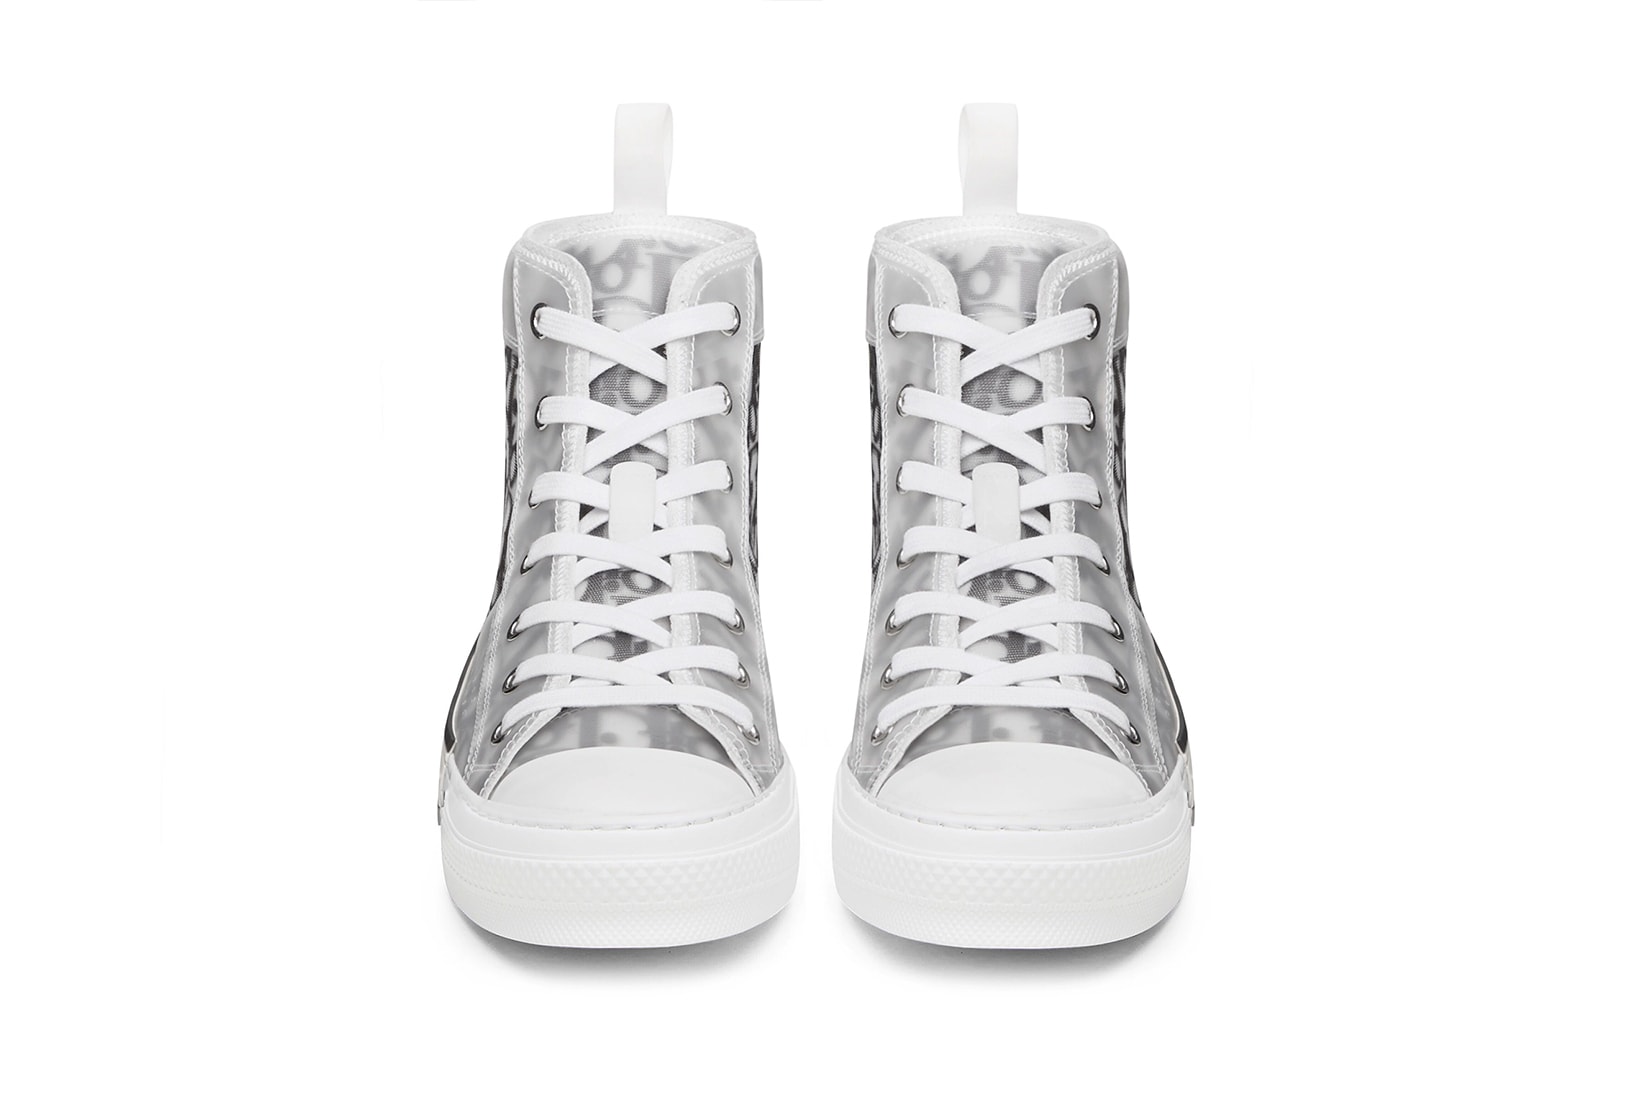 Sneakerboy Raffle Dior Homme B23 Sneaker Competition Australian Store Win